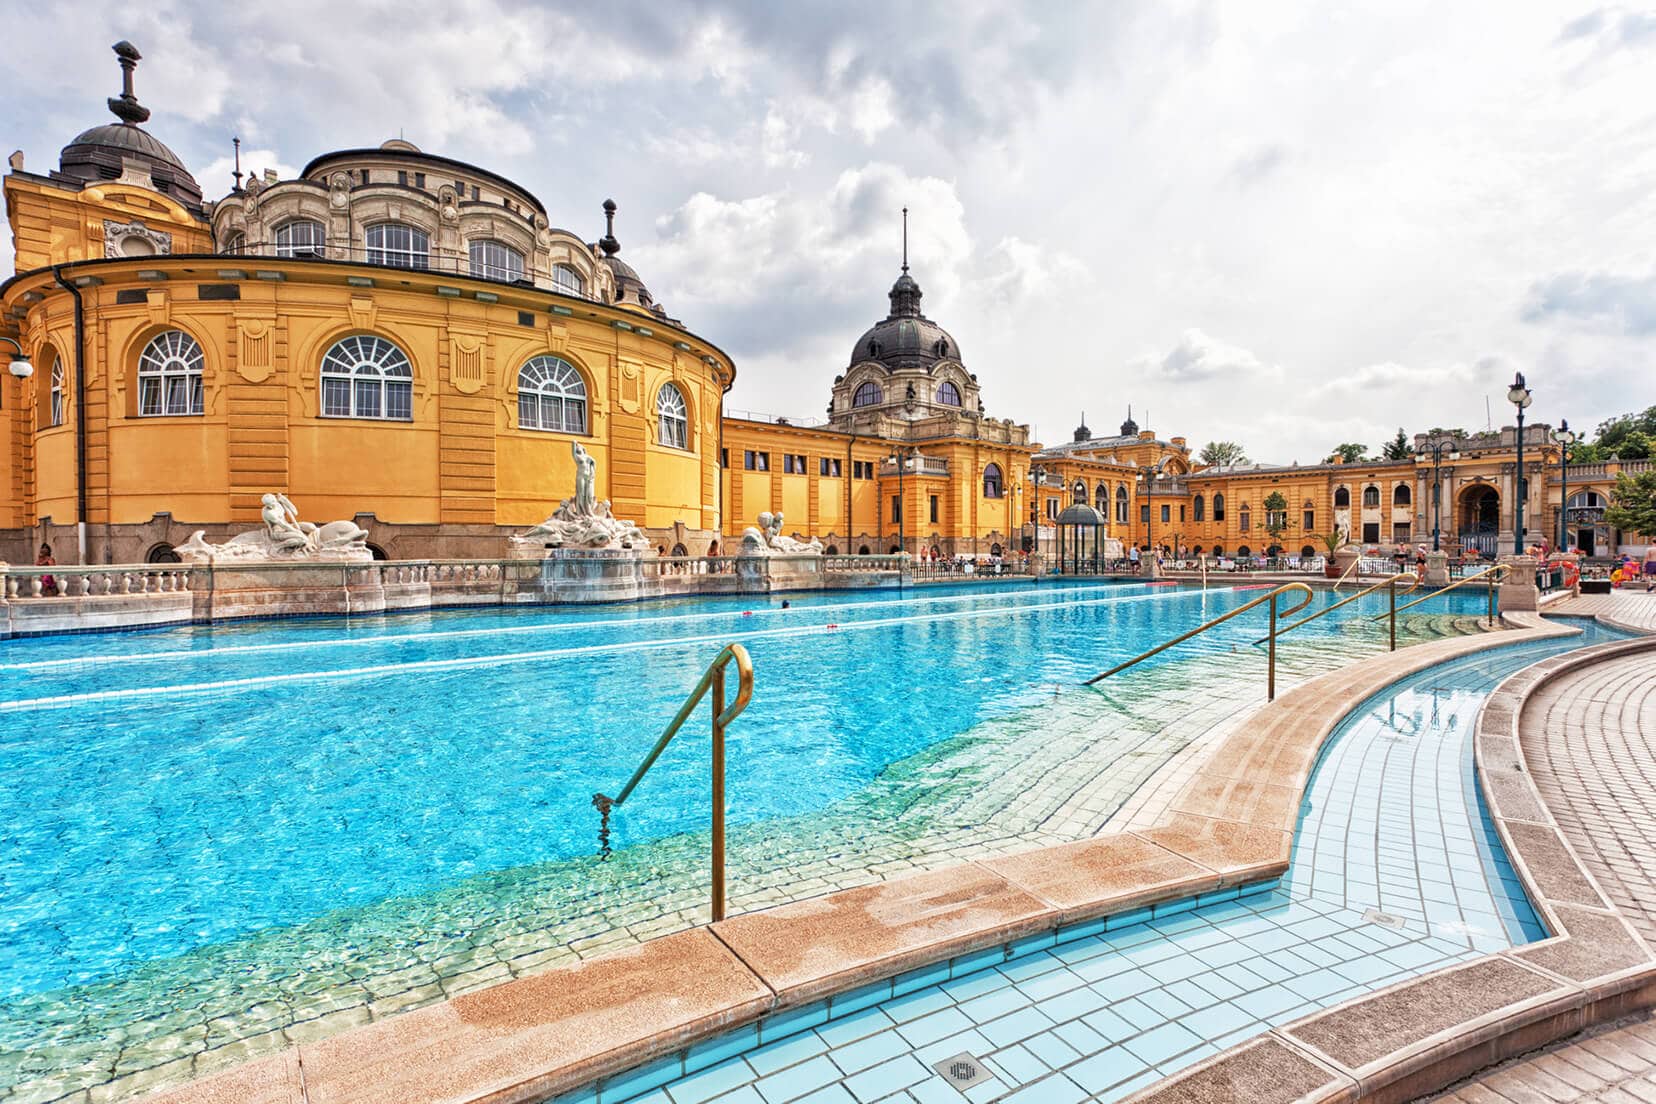 Budapest Instagram photo guide - Széchenyi Spa Thermal Baths